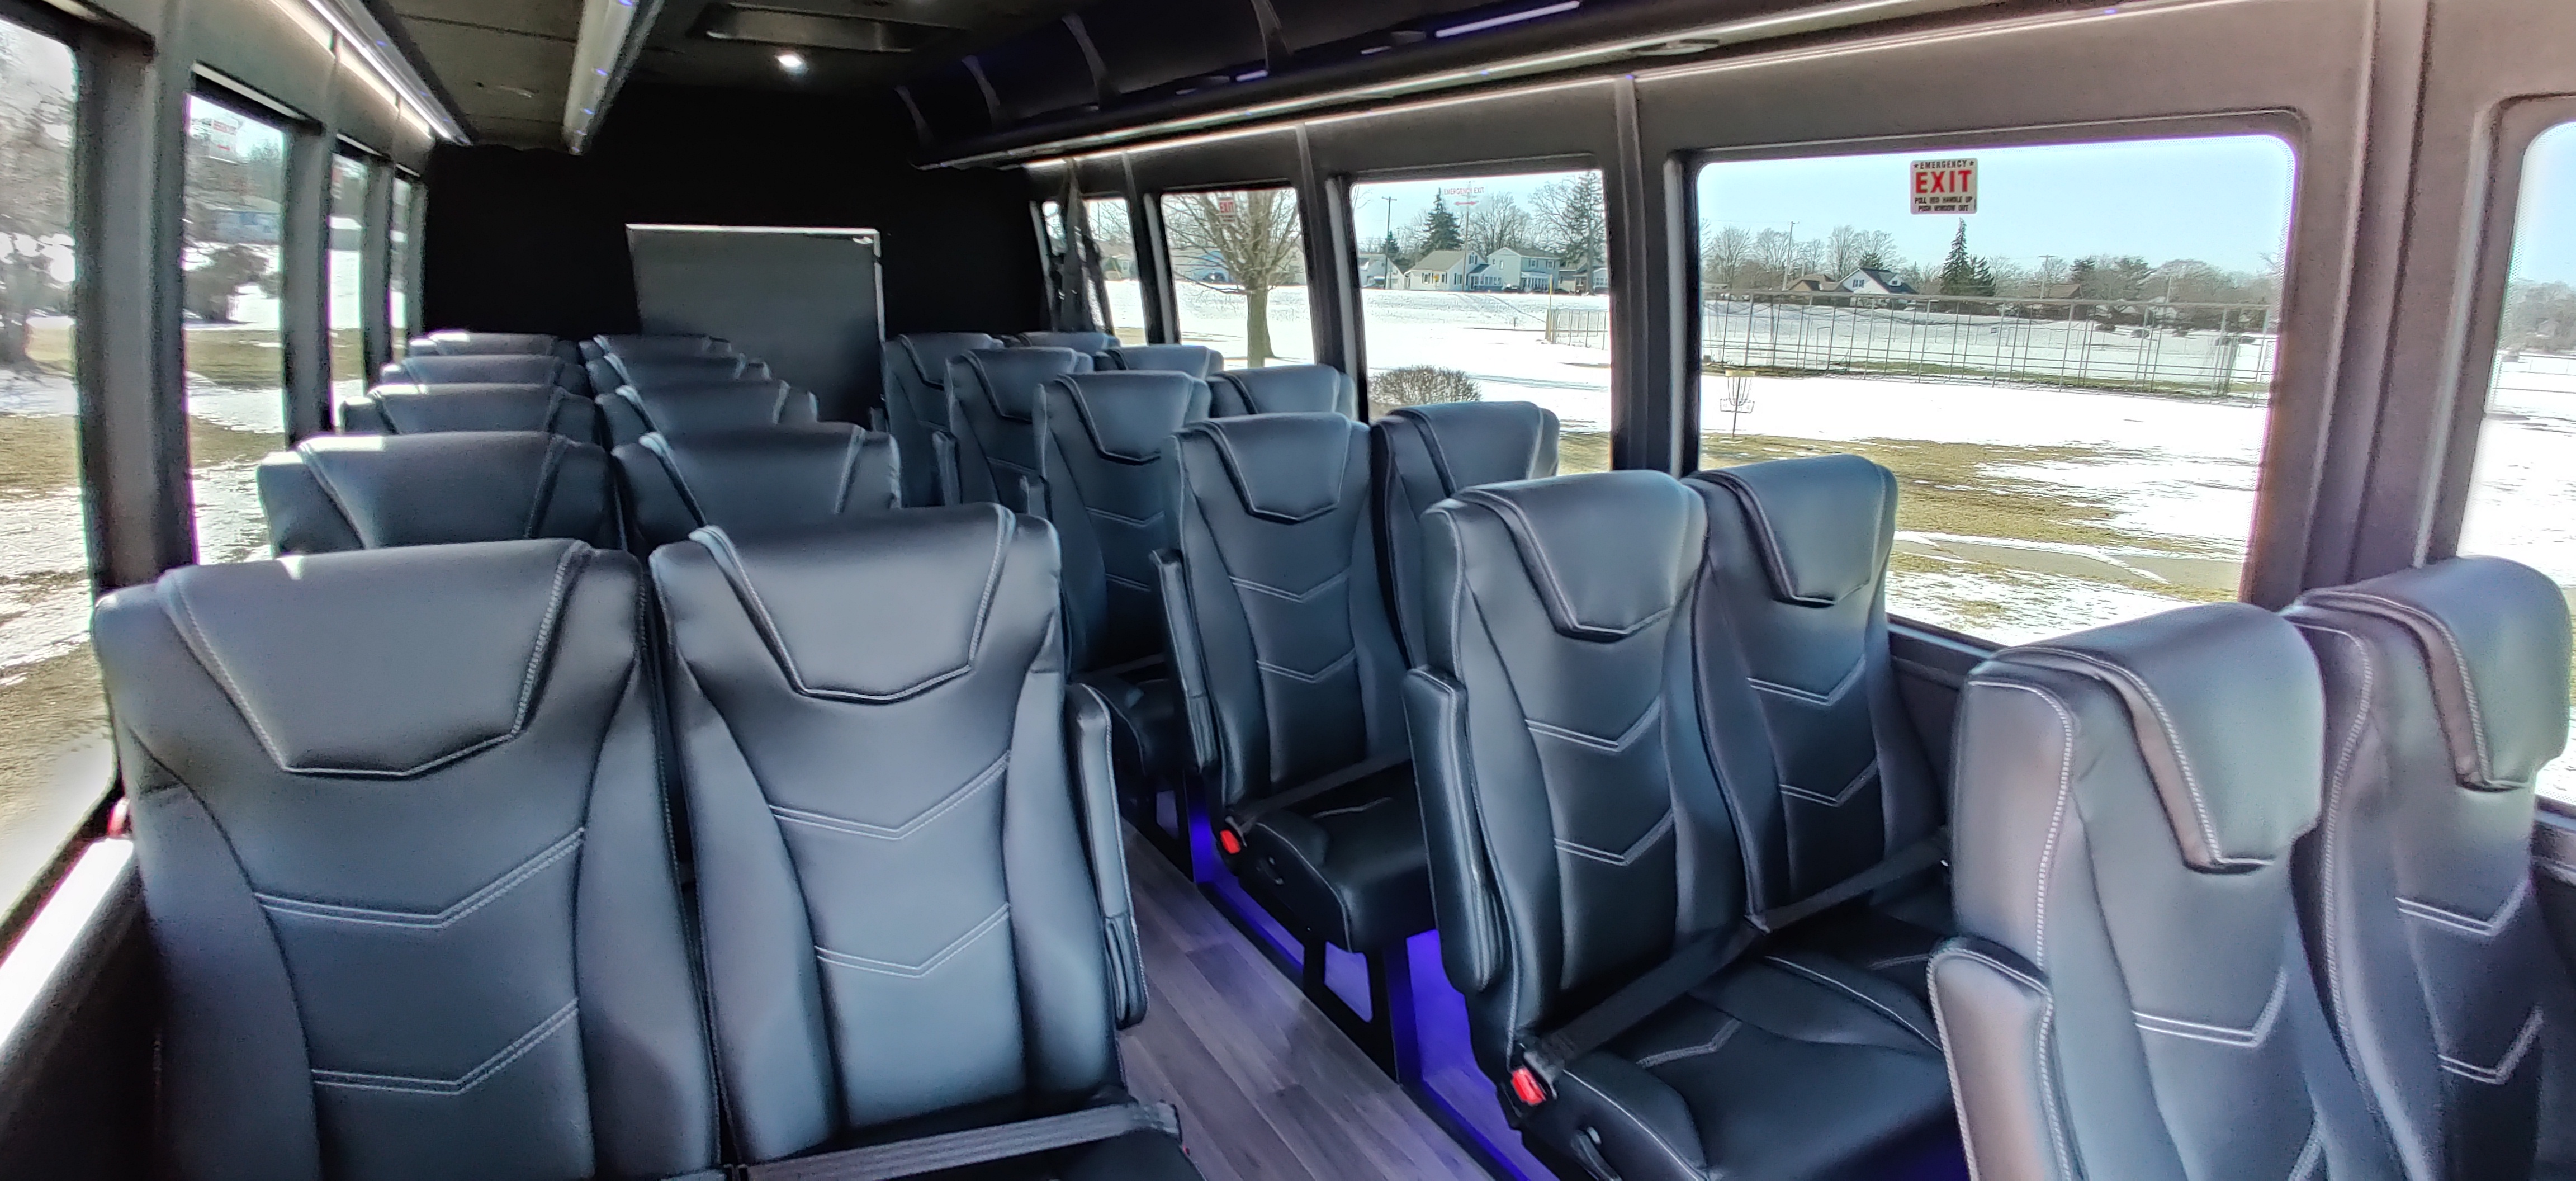 26 Passenger Executive Shuttle Bus Interior